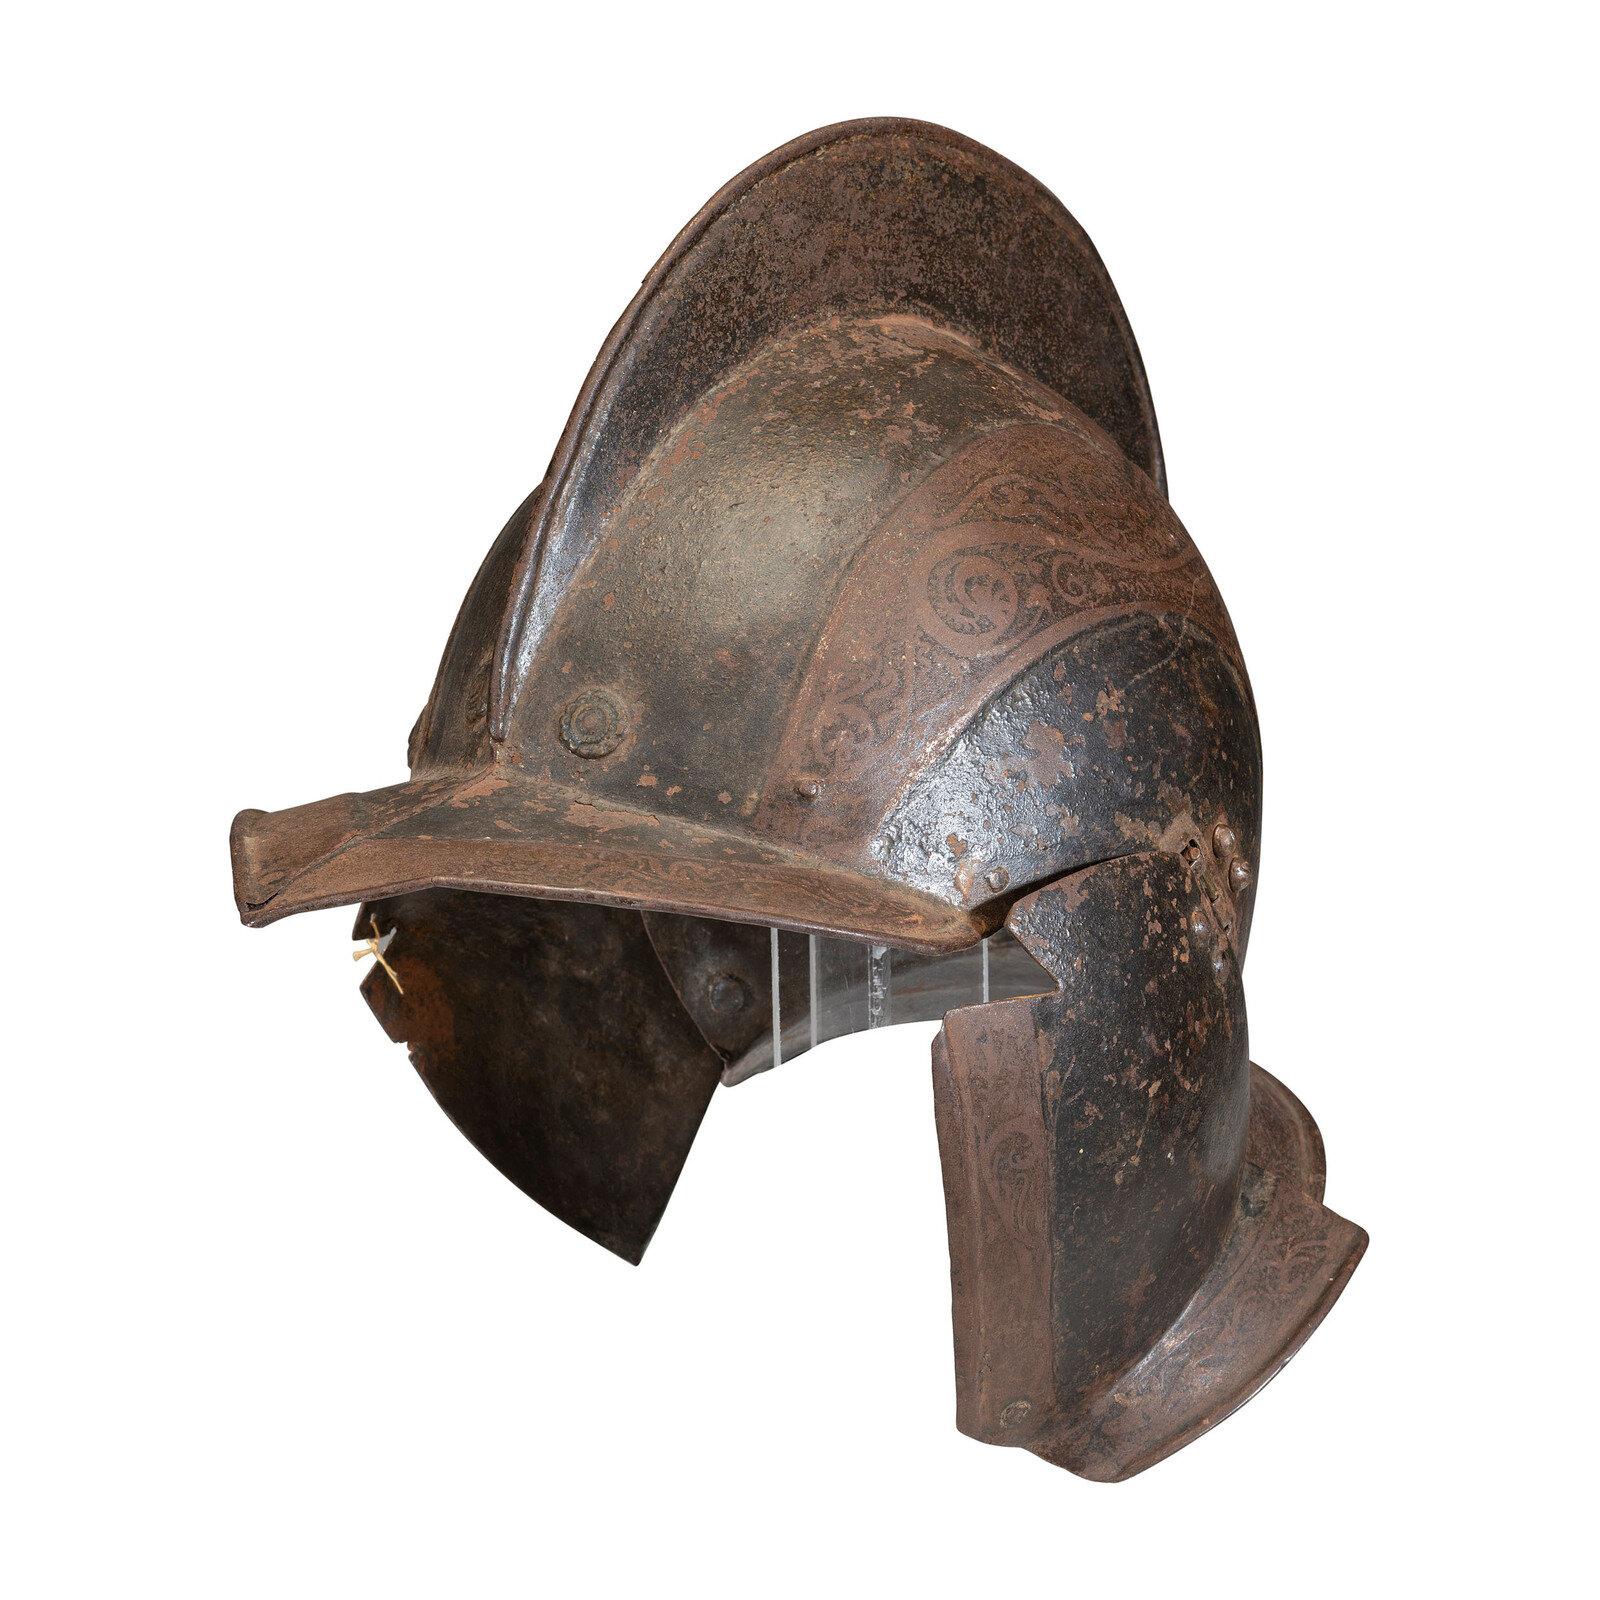 An Etched German Burgonet Helmet